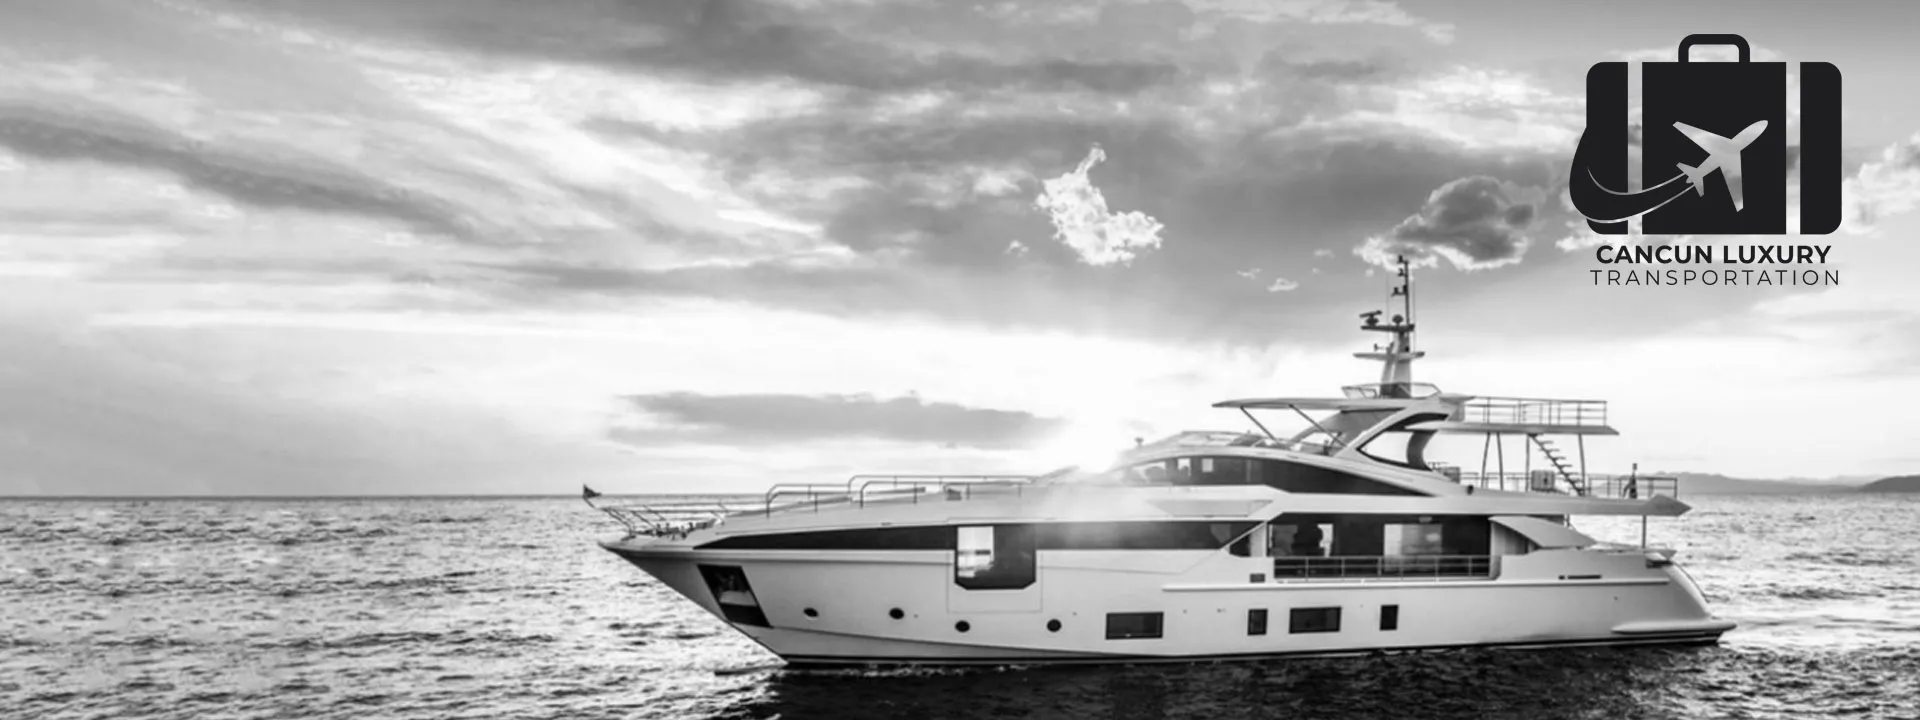 cancun luxury transportation yachts